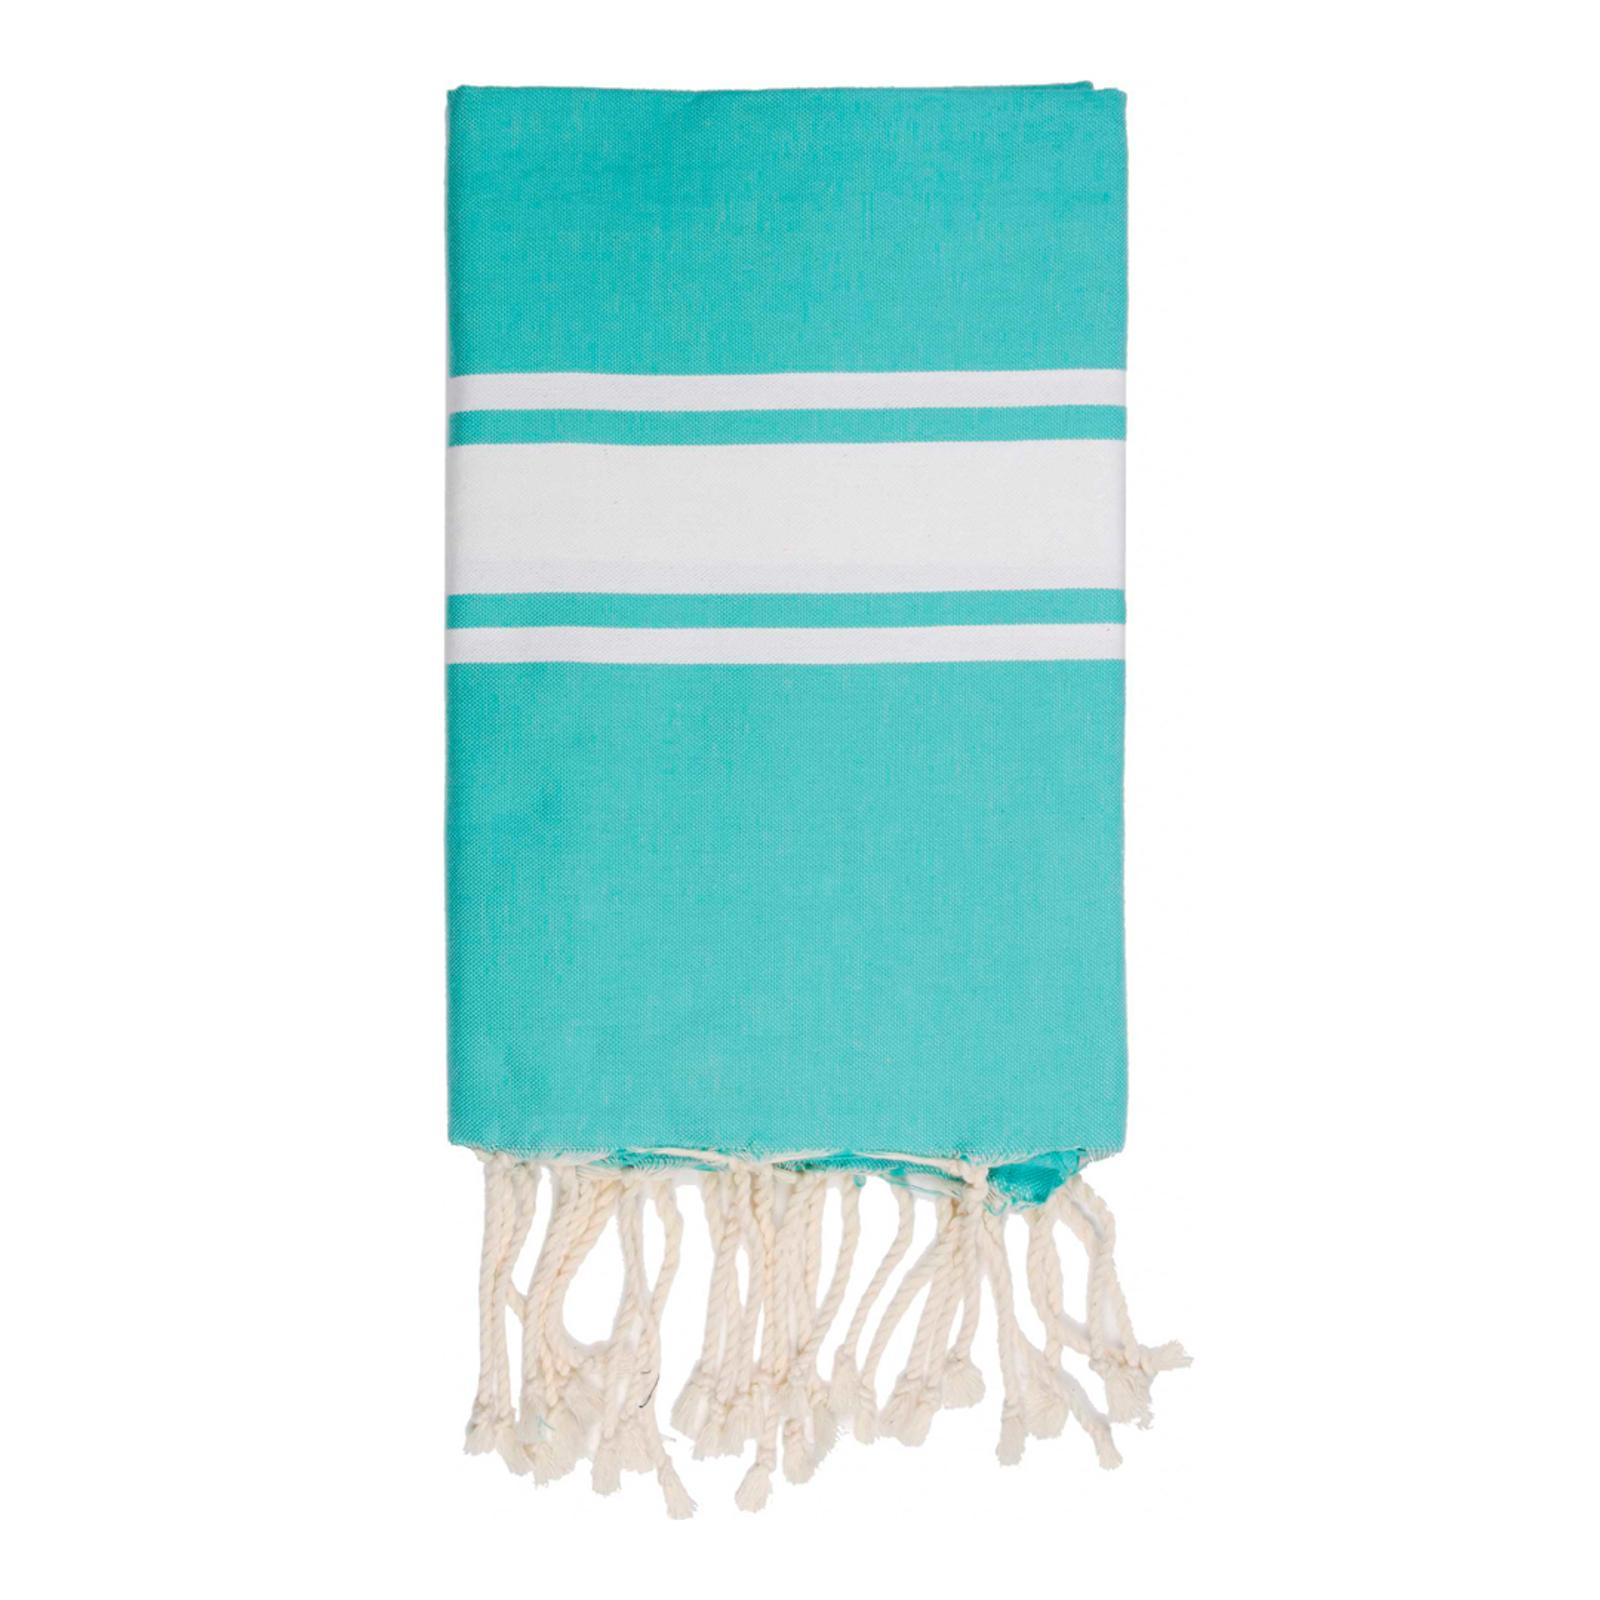 St Tropez Hammam Towel, Turquoise - BrandAlley